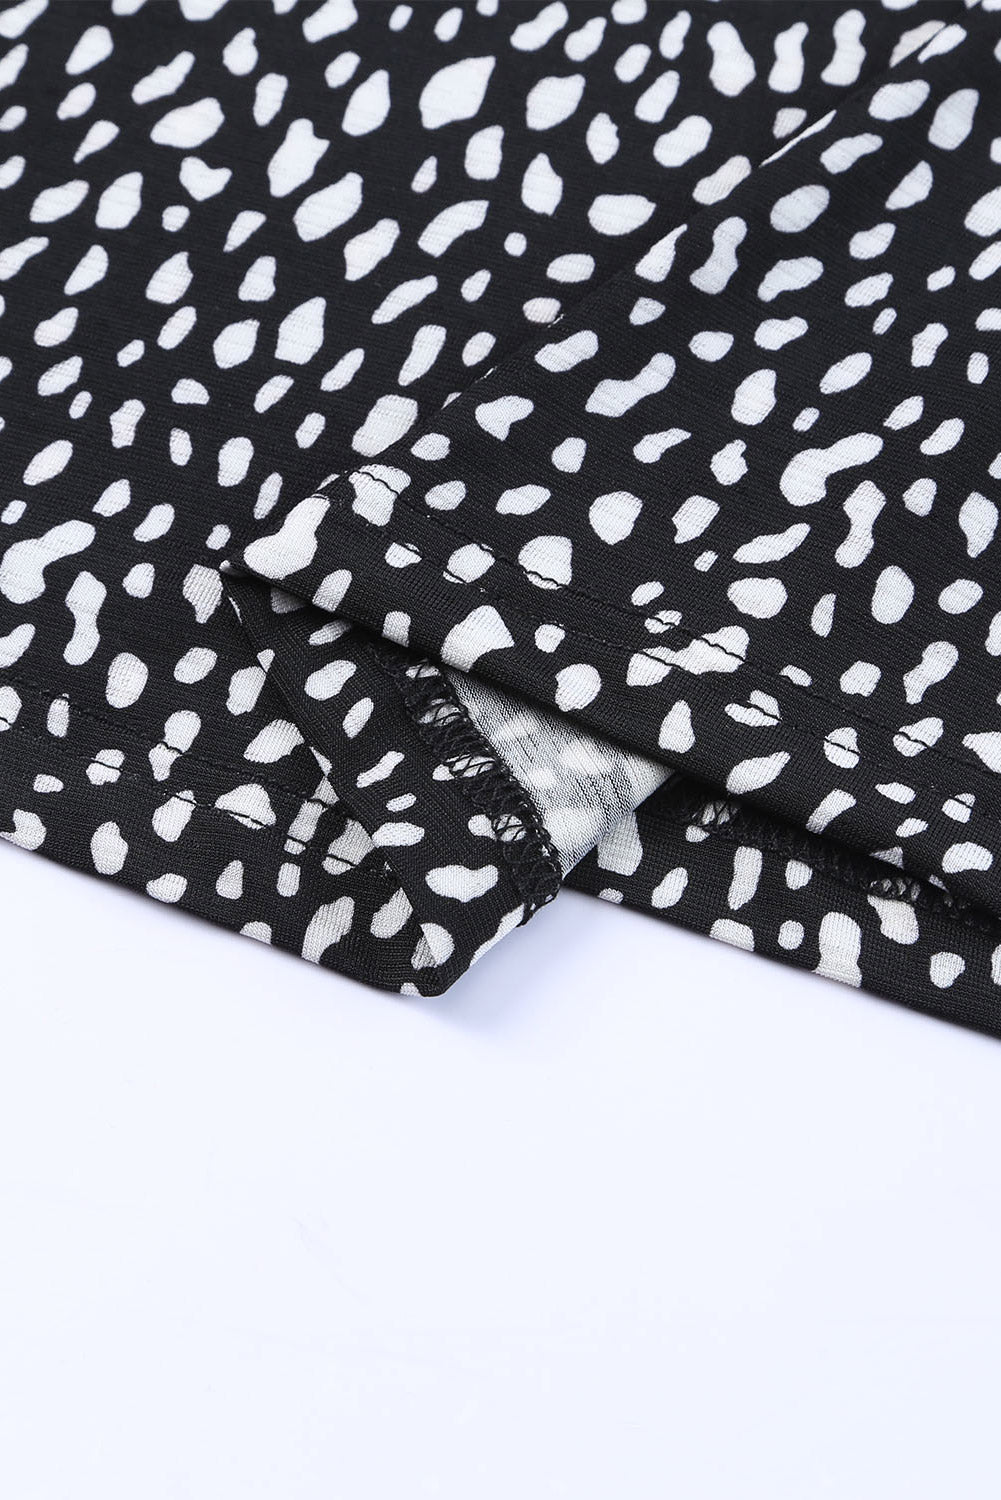 Black Cheetah Print Casual Short Sleeve Crew Neck T Shirt